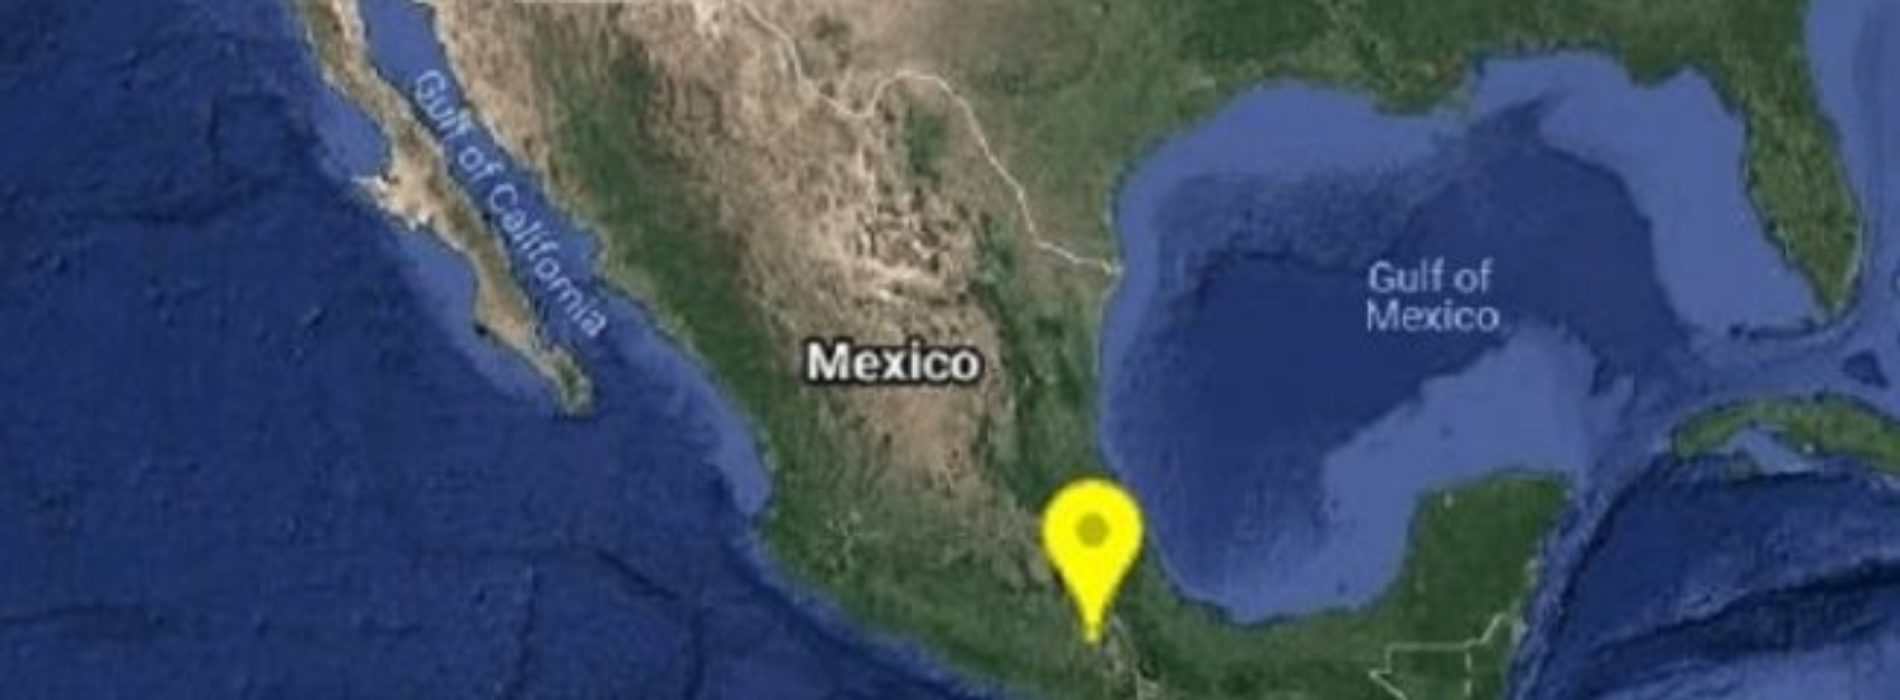 Se activan protocolos de monitoreo en Oaxaca por sismo:
CEPCO